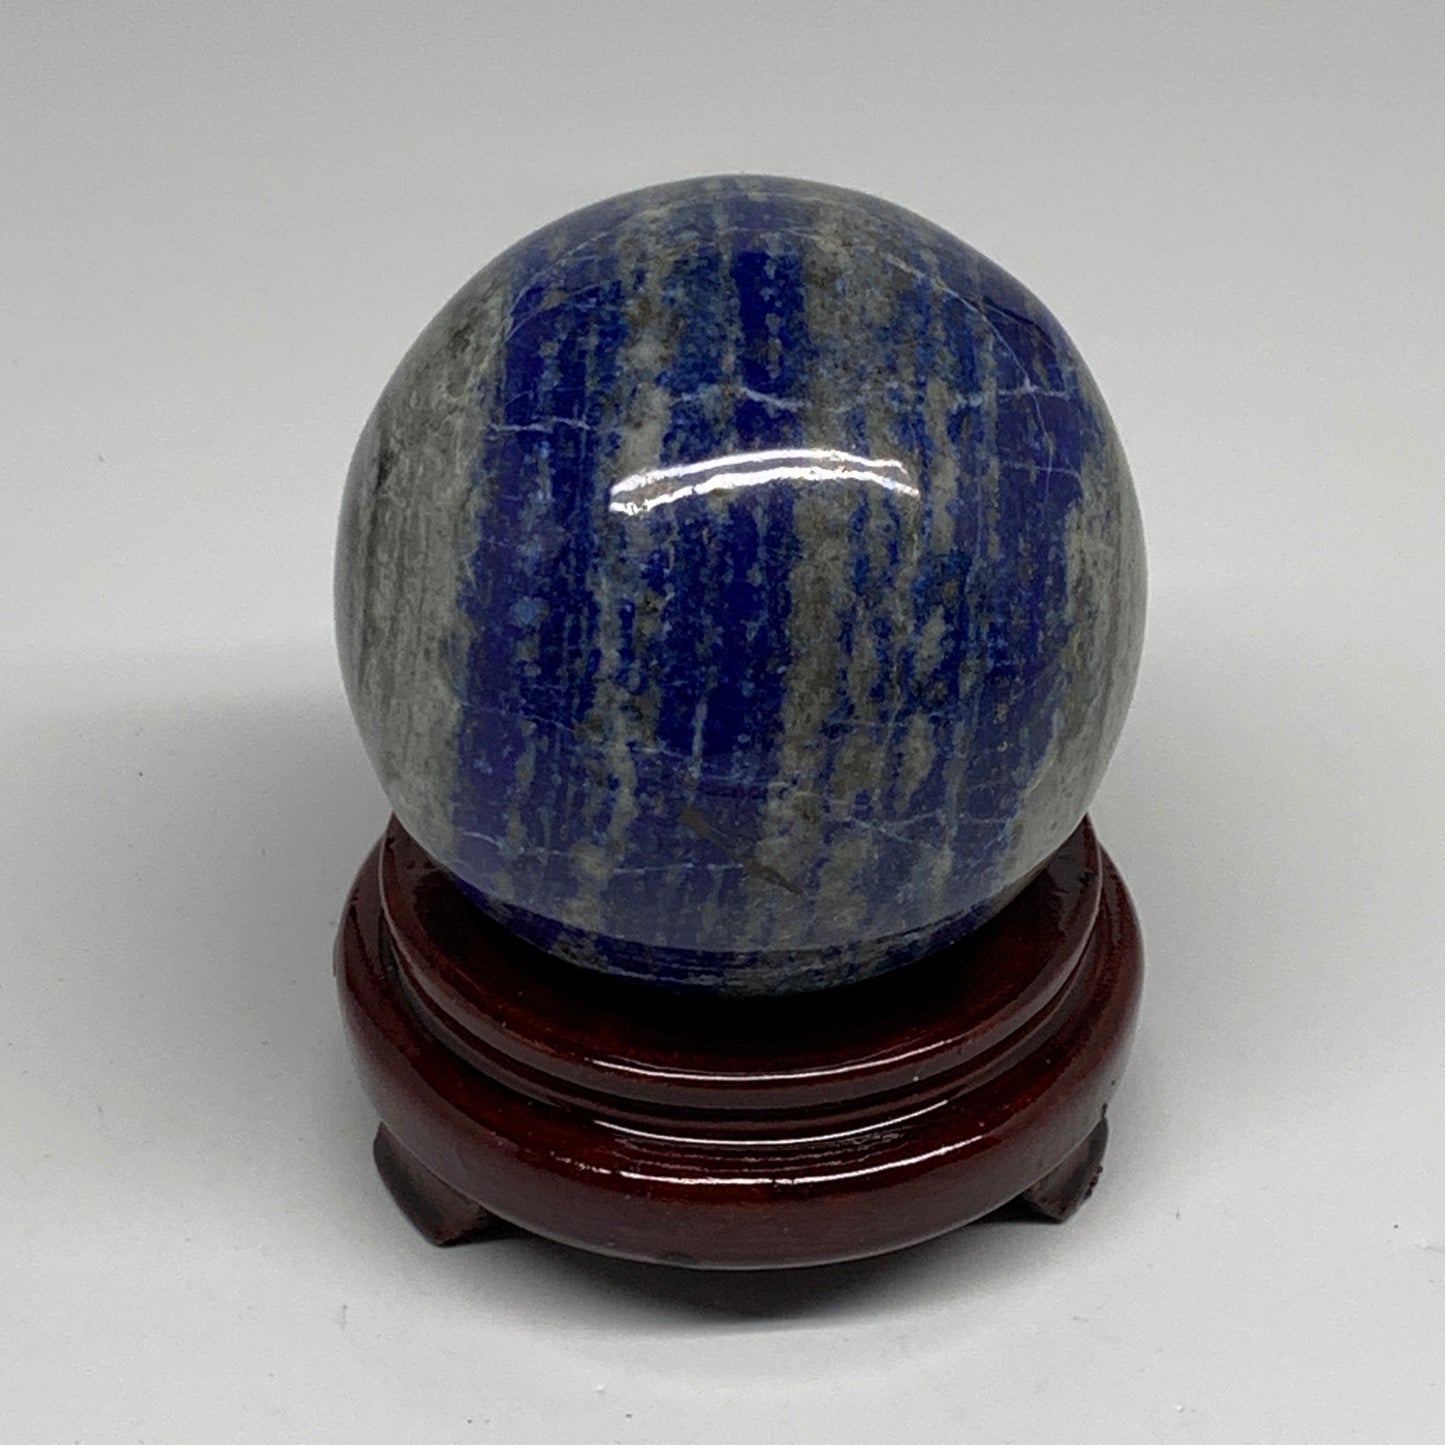 2.4 lbs, 3.5" (87mm), Lapis Lazuli Sphere Ball Gemstone @Afghanistan, B33220